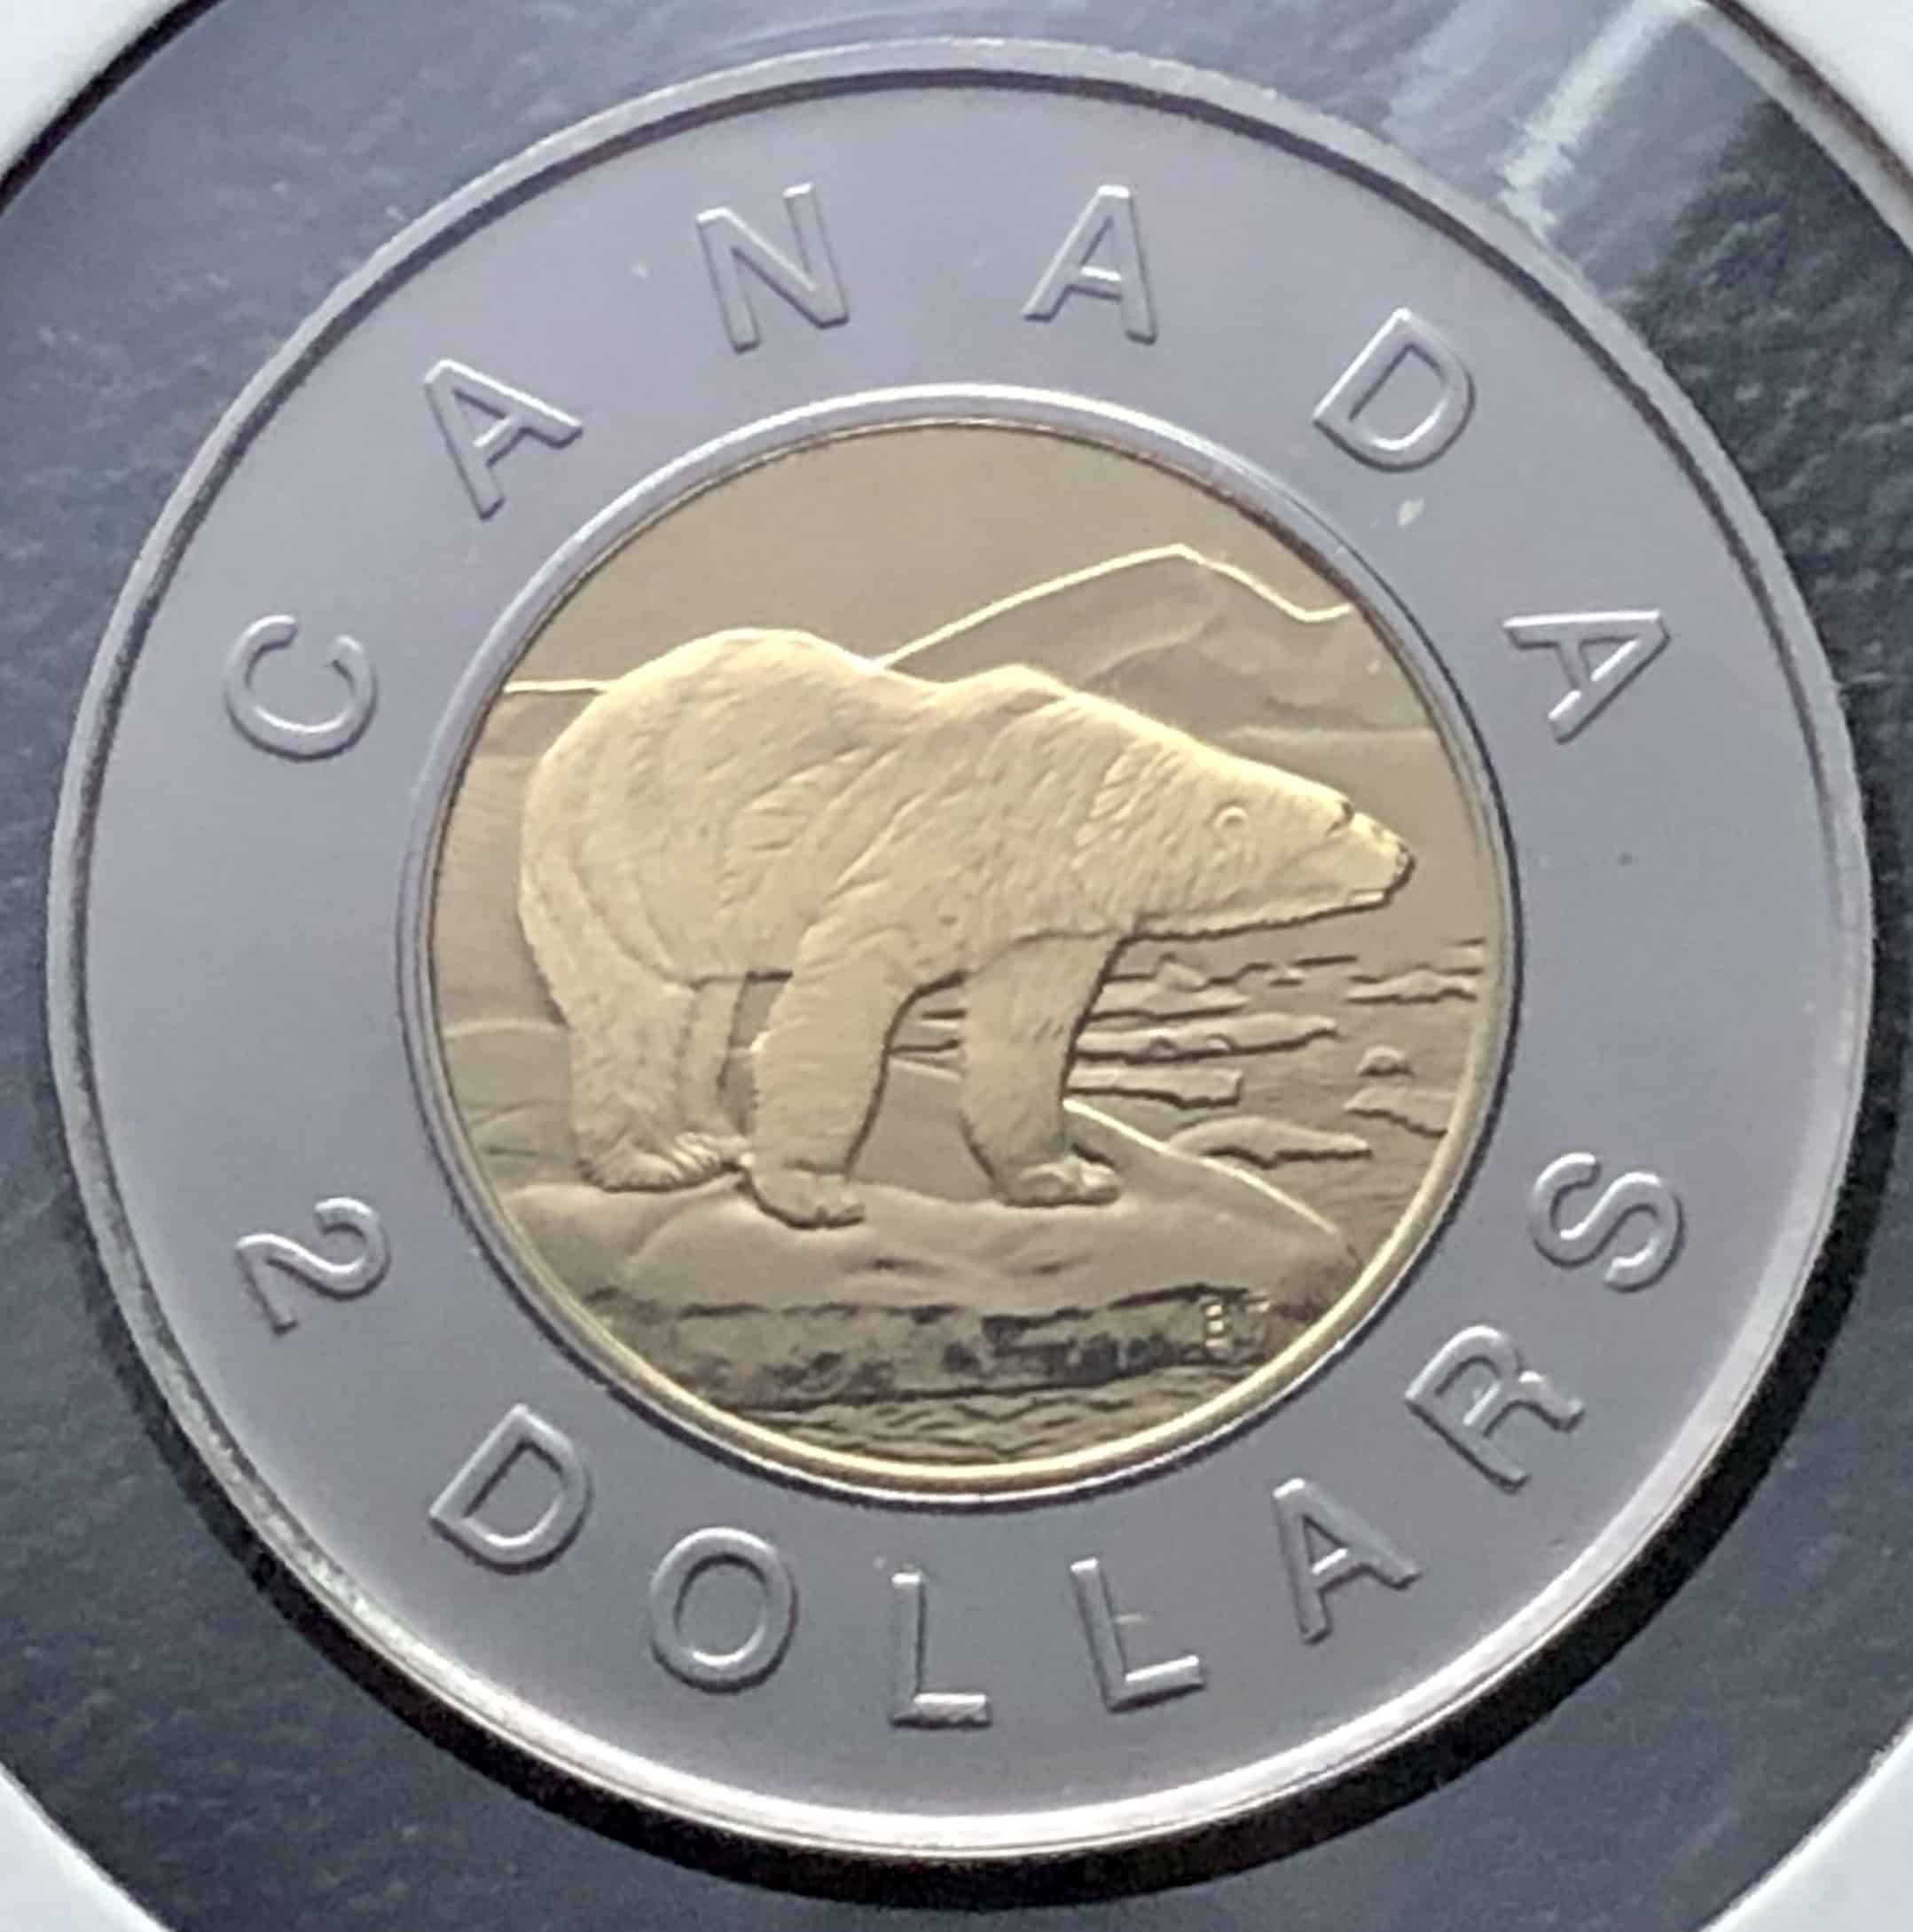 Canada - 2 Dollars 1998 - B.UNCCanada - 2 Dollars 1998 - B.UNC